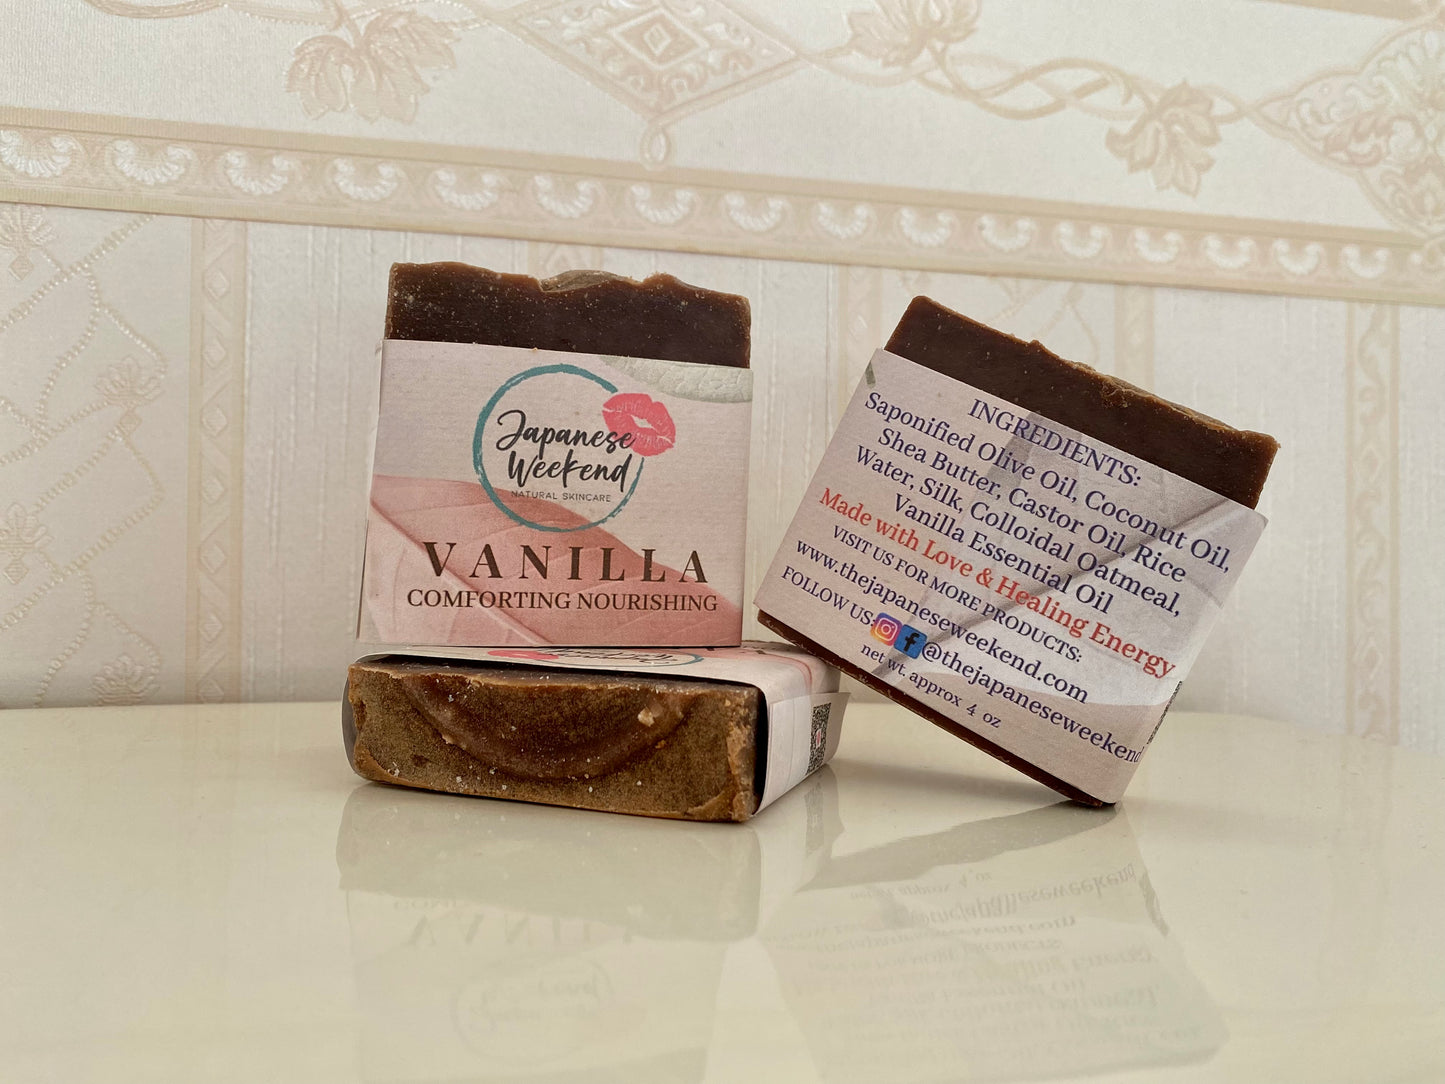 Vanilla (Deeply Nourishing Comforting) Soap Bar